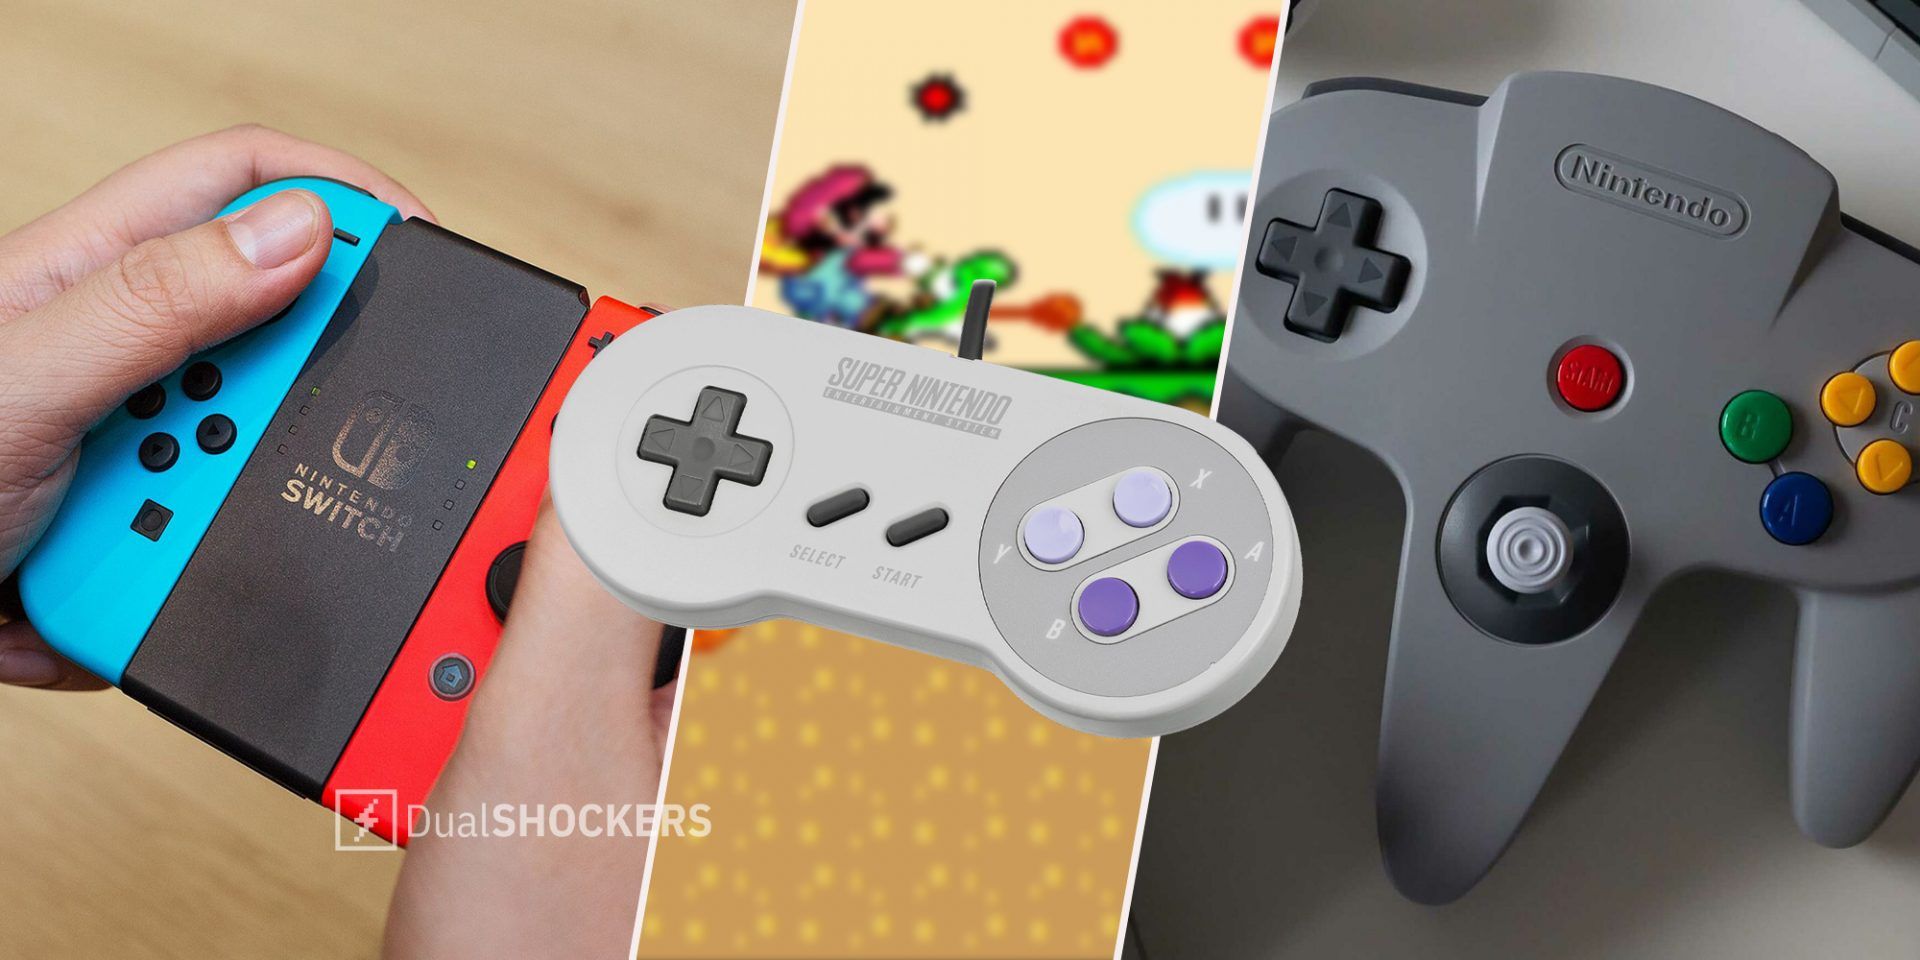 Nintendo Switch joycon controller on left, Super Nintendo controller in middle, Nintendo 64 controller on right